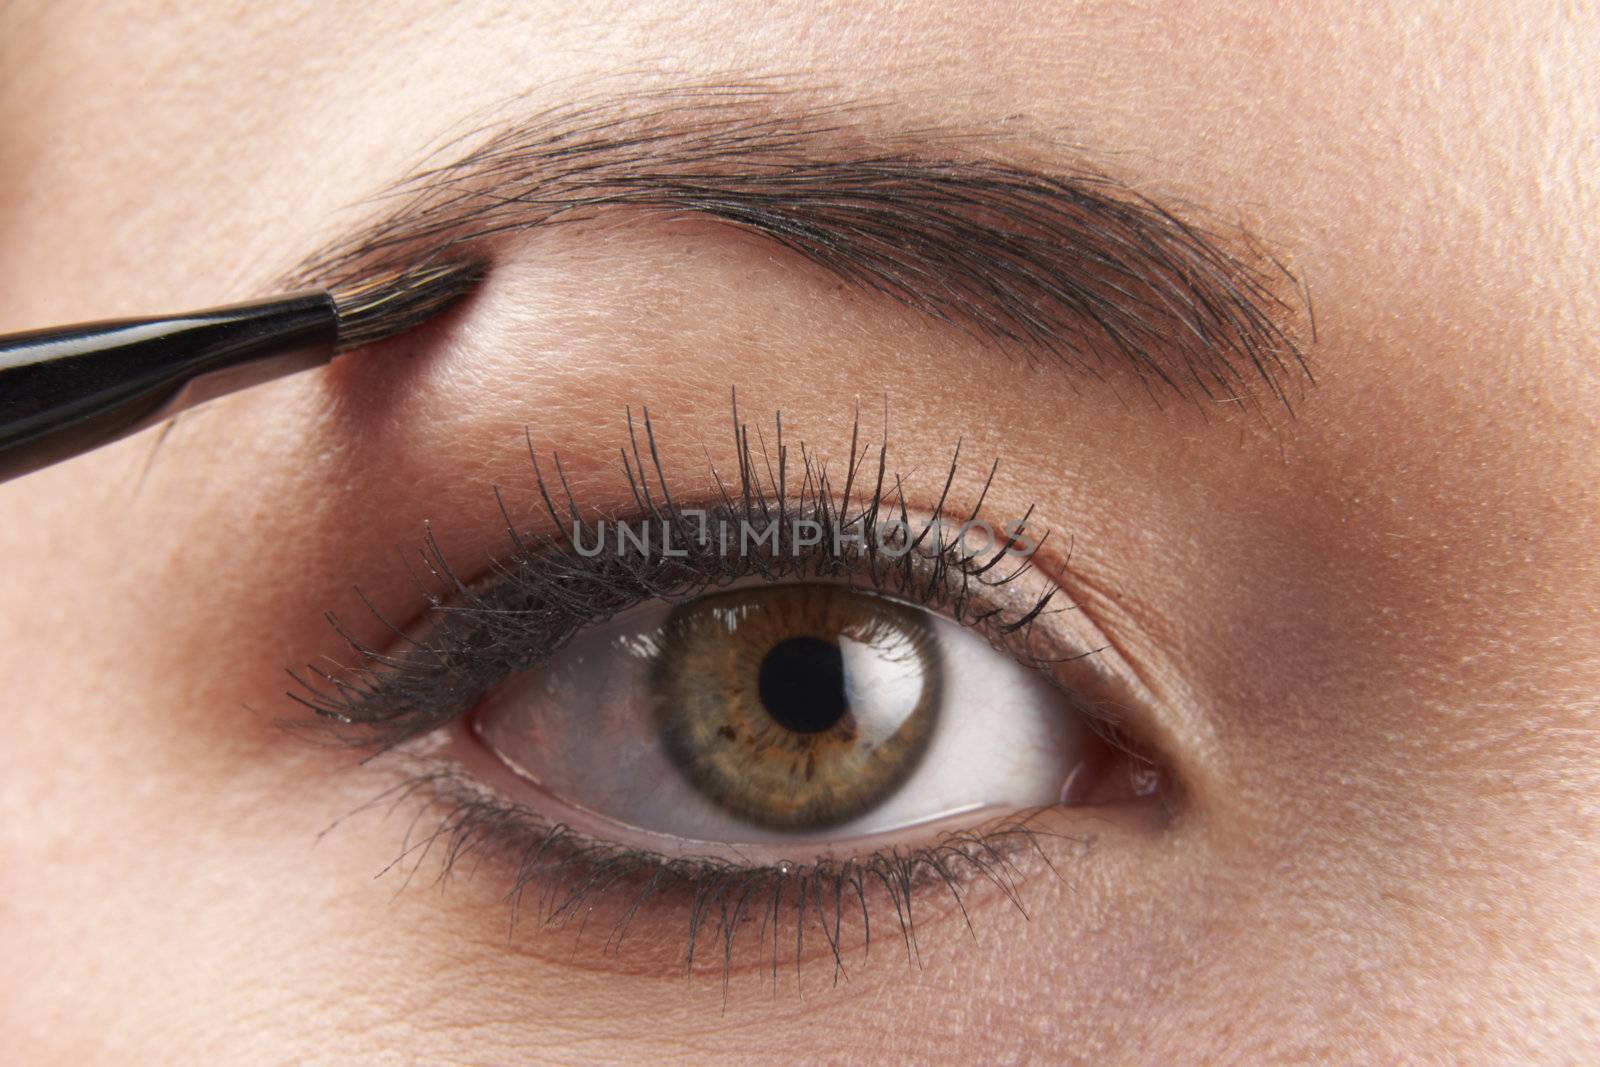 woman applying eye make-up with brush on white background